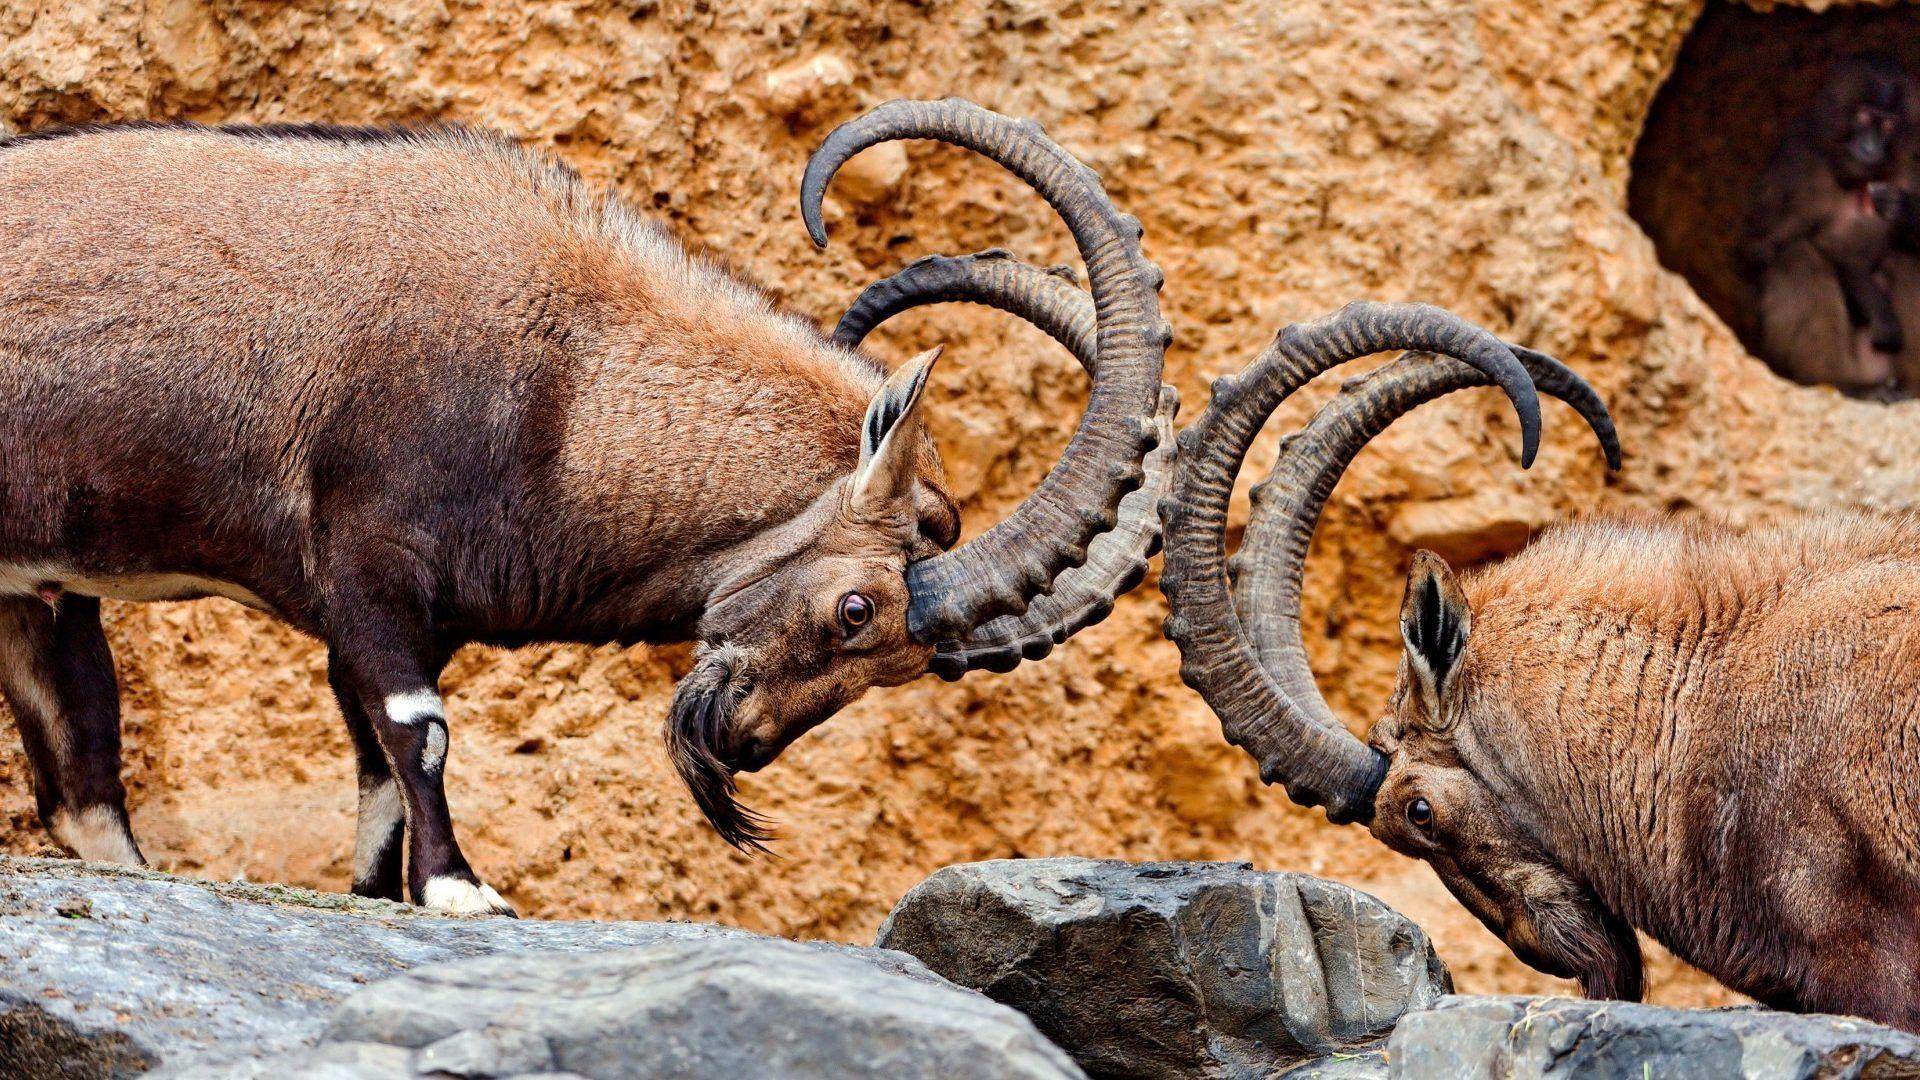 Goats Tag wallpaper: Goats Artiodactyl Goat Animal Pets Horns